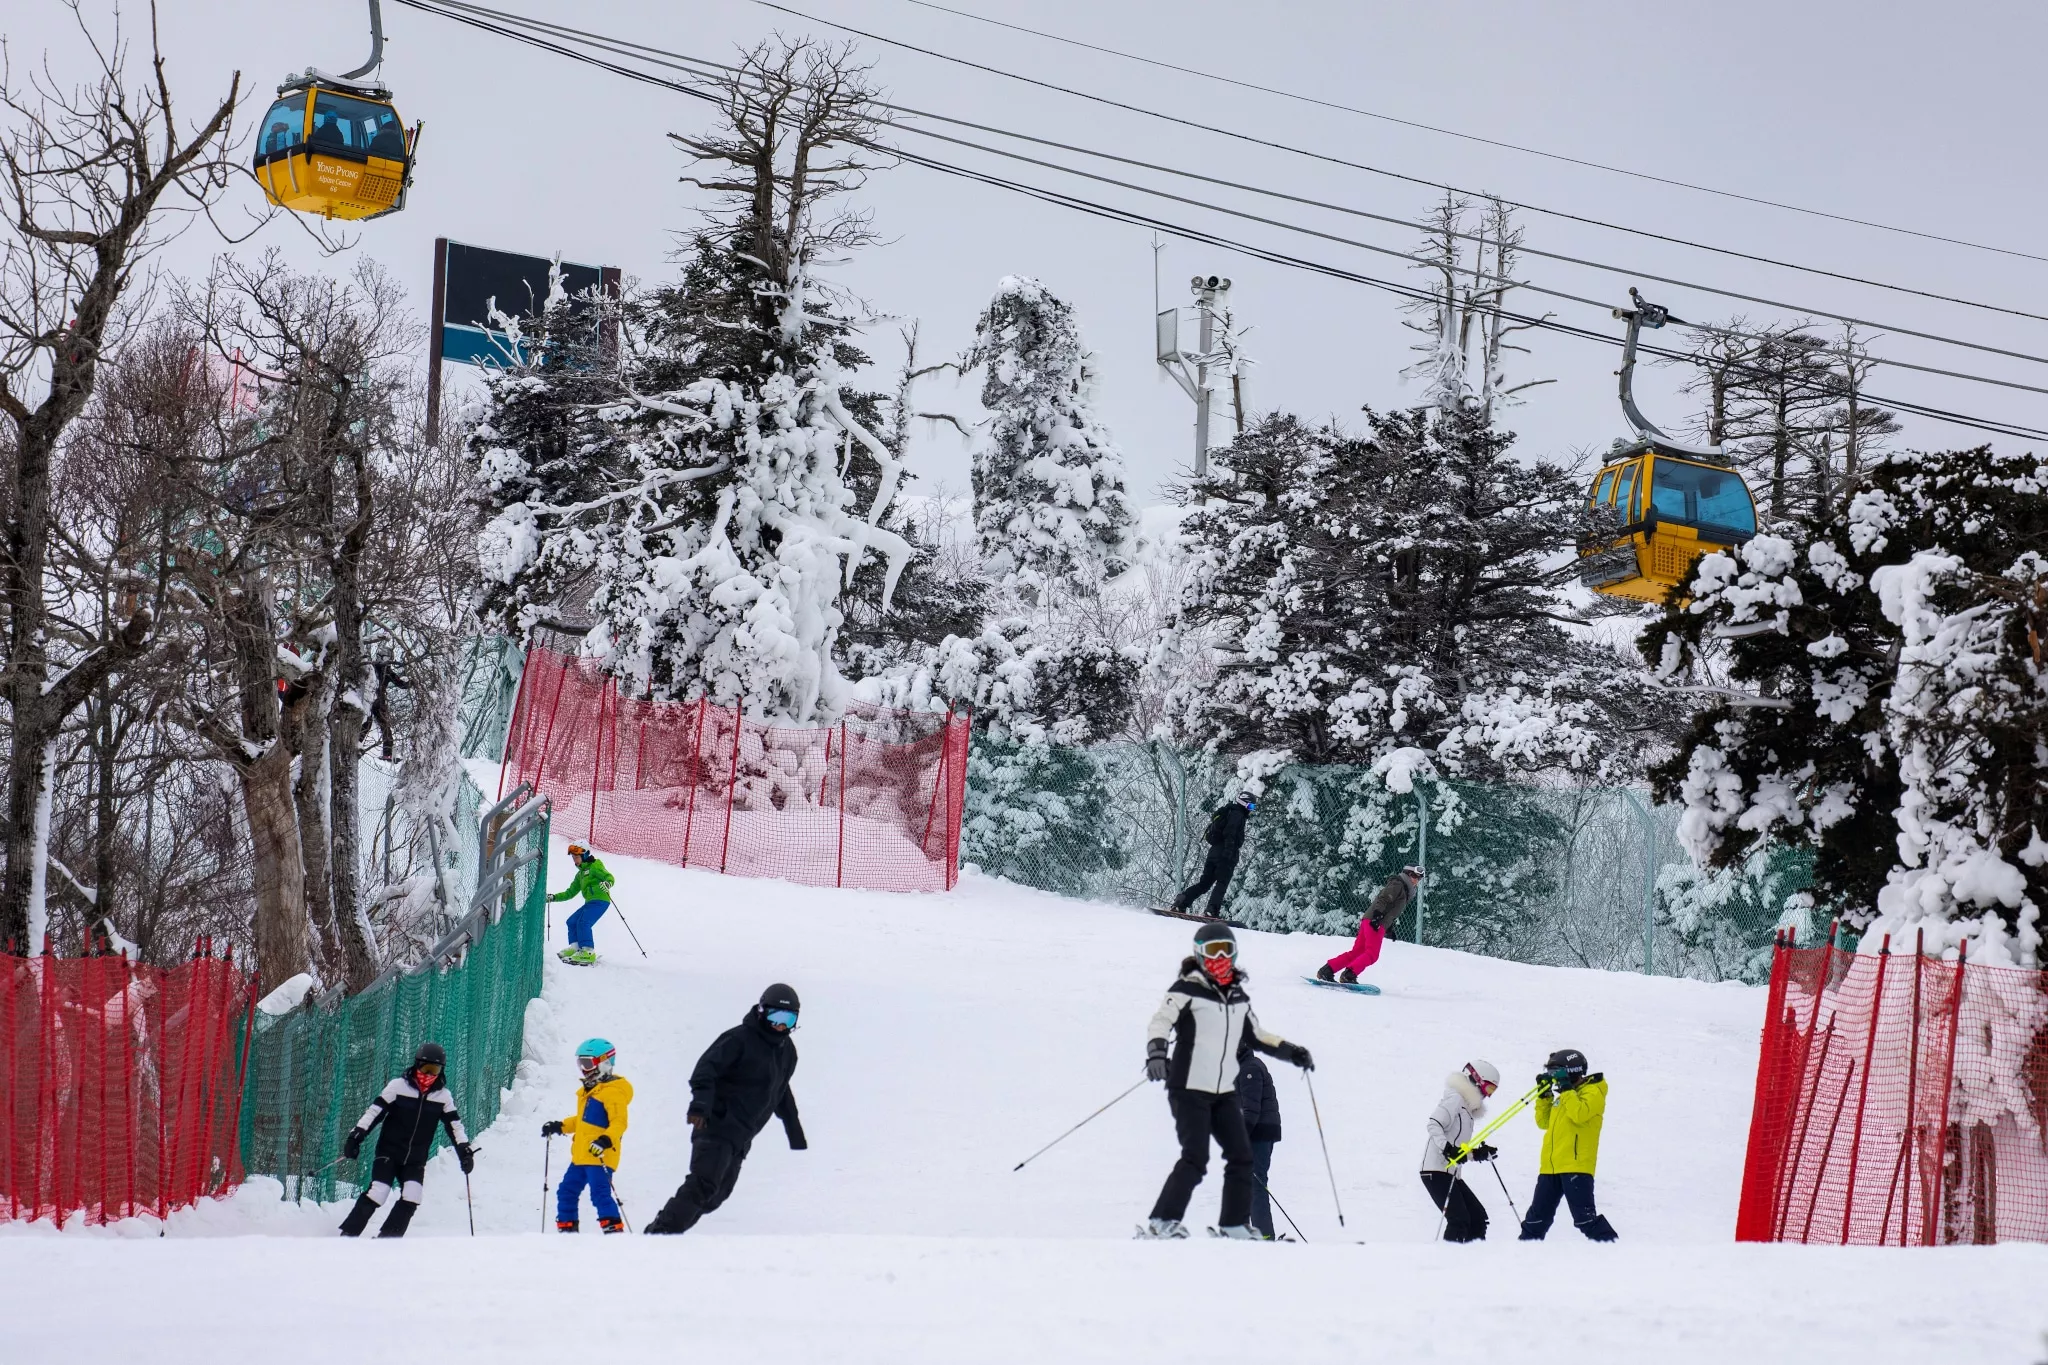 Yongpyong Ski Resort in South Korea, East Asia | Snowboarding,Skiing,Snowmobiling - Rated 3.9